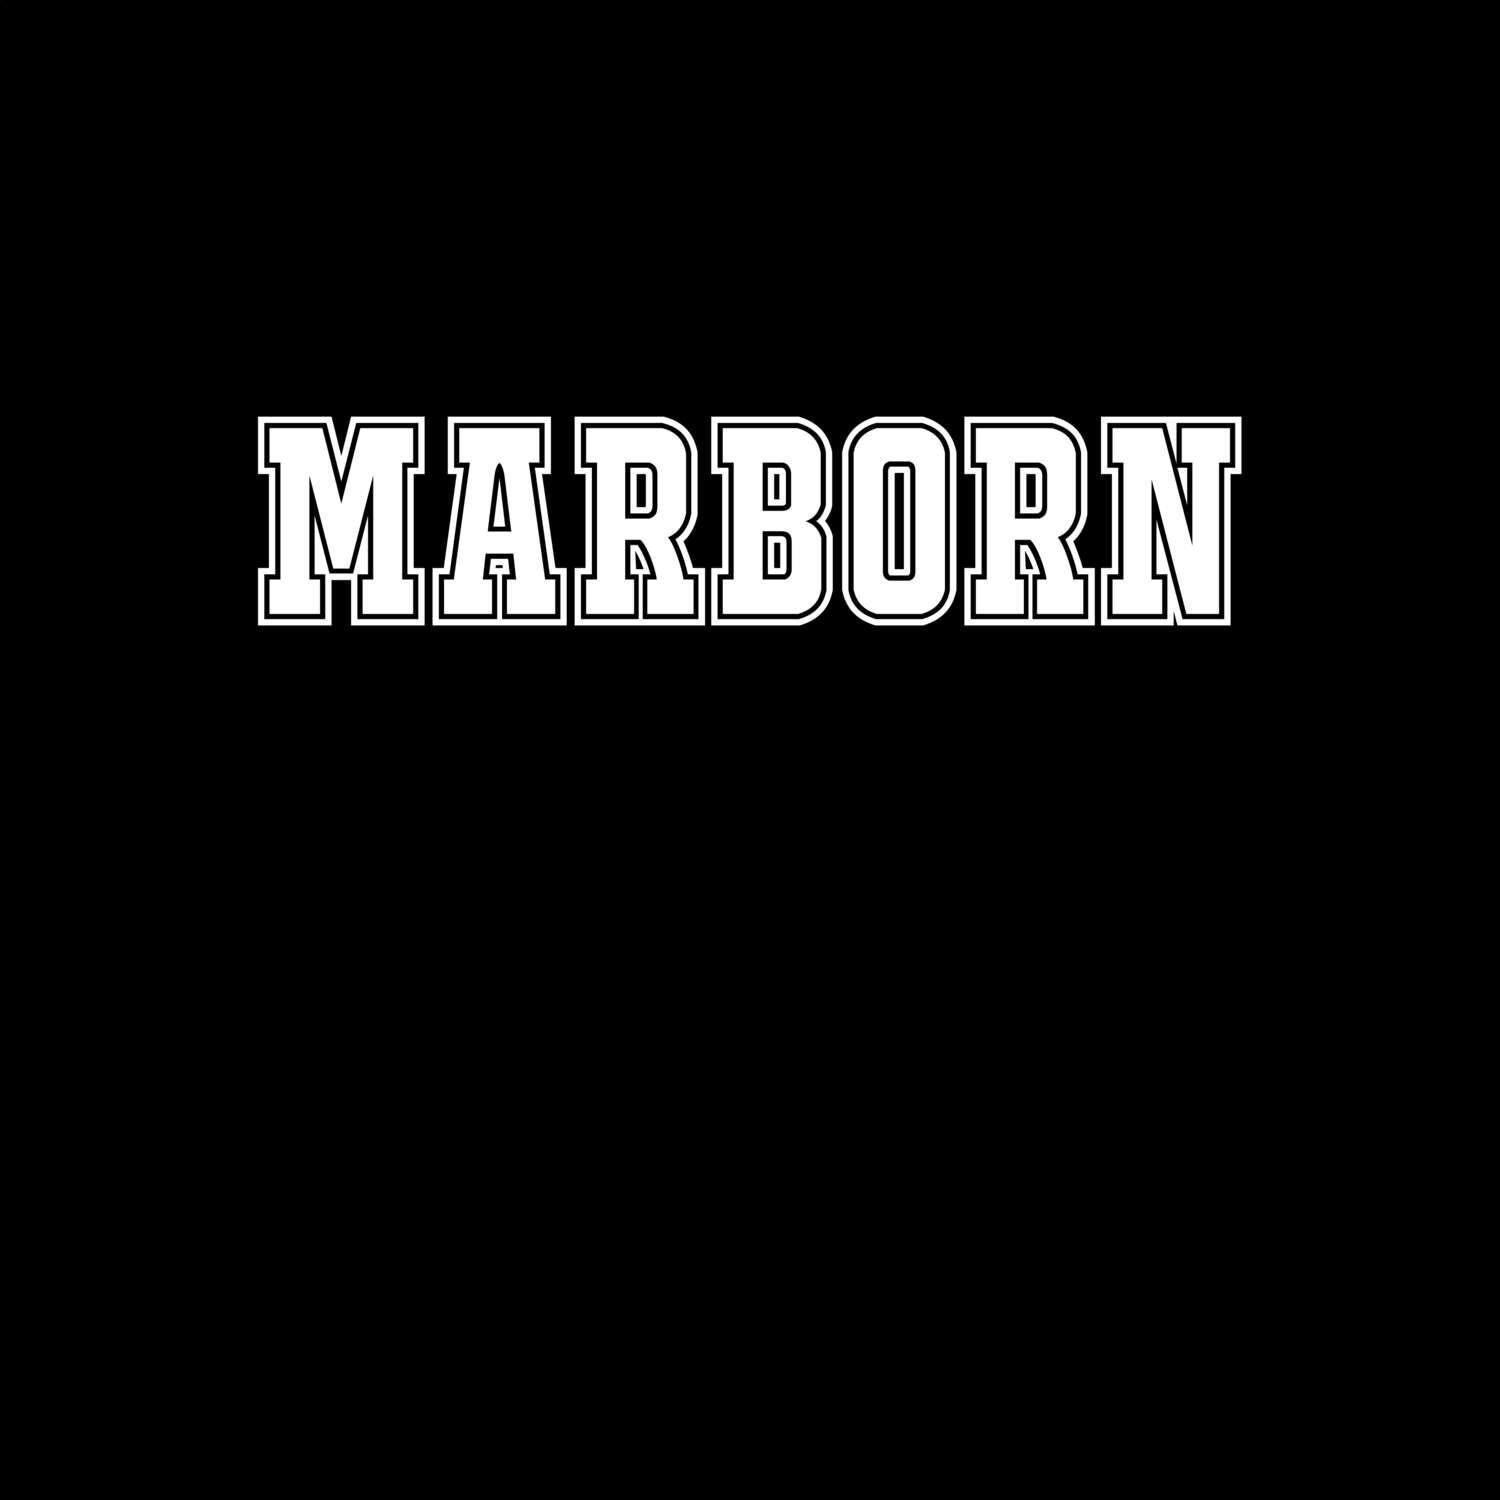 Marborn T-Shirt »Classic«